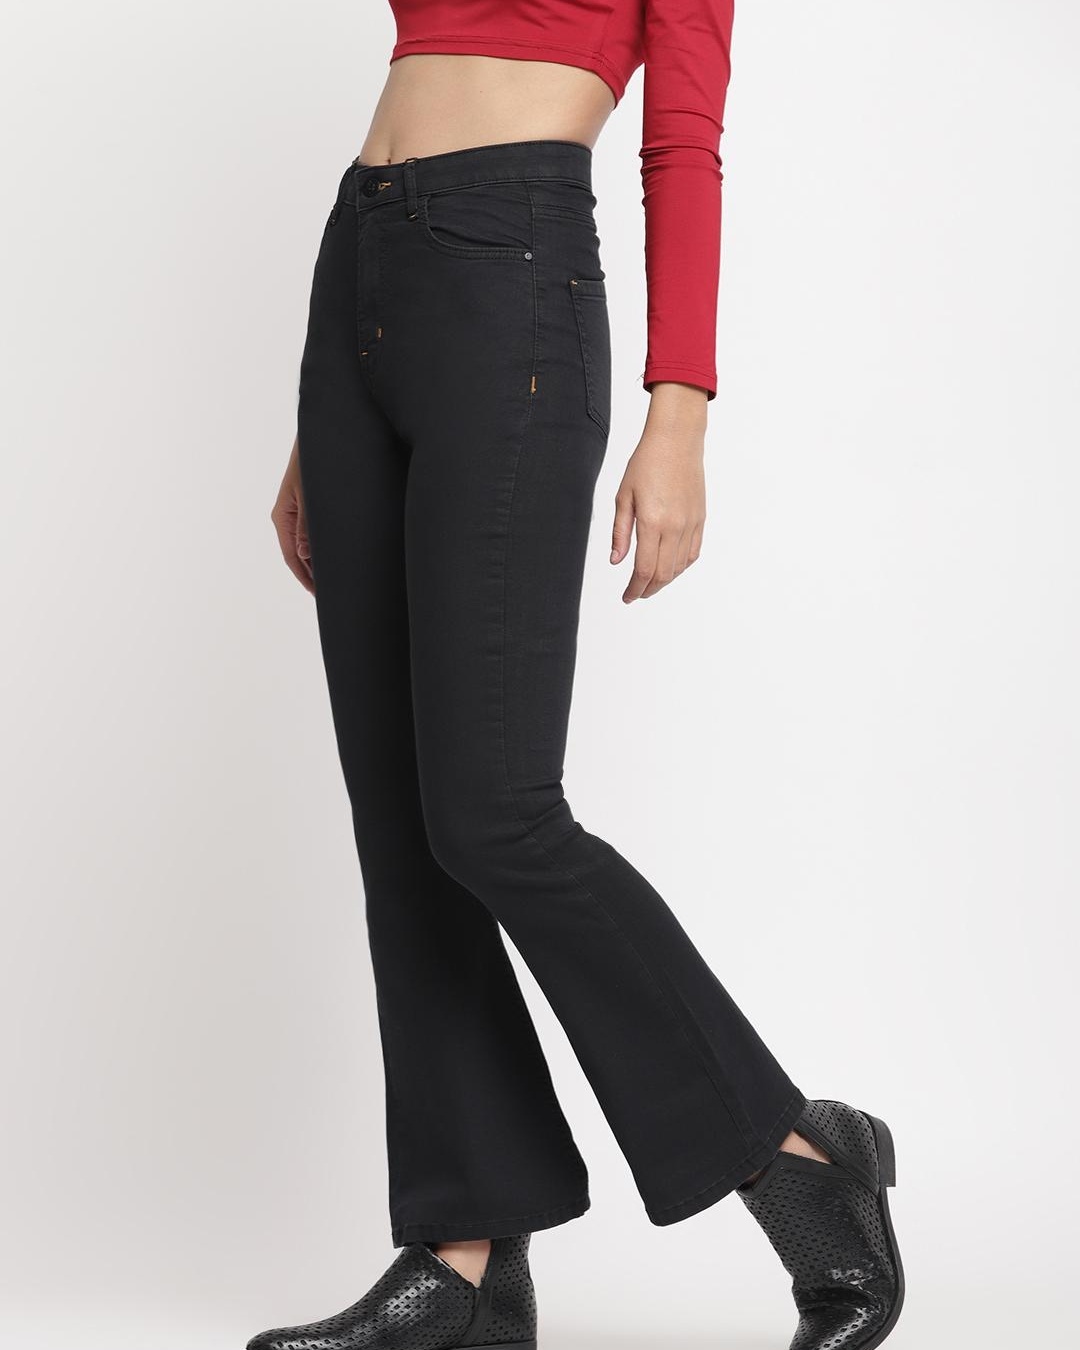 Buy Women's Black Bootcut Jeans Online at Bewakoof